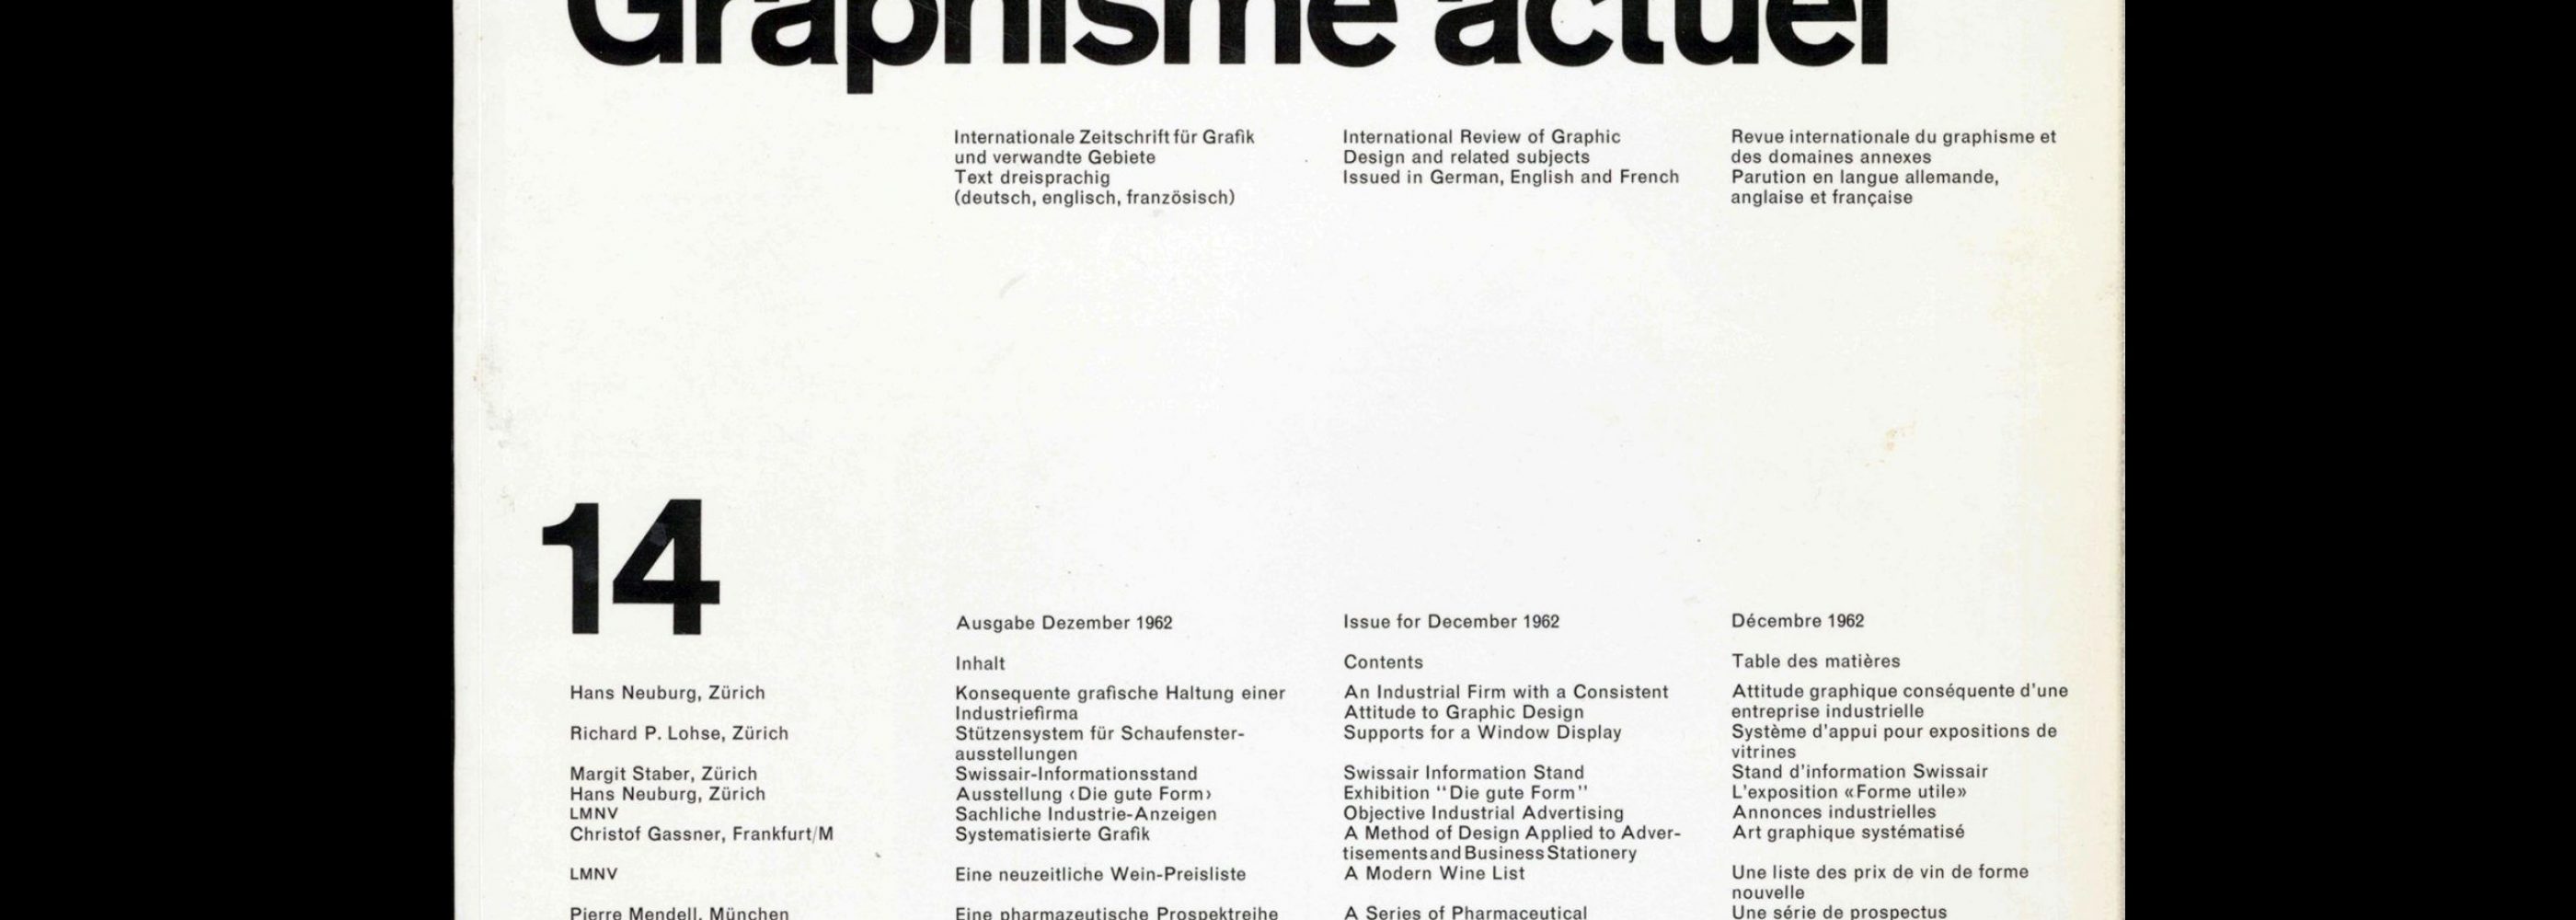 Neue Grafik / New Graphic Design / Graphisme actuel - No.14, 1962. Josef Müller-Brockmann, Hans Neuburg, Richard Paul Lohse, and Carlo Vivarelli